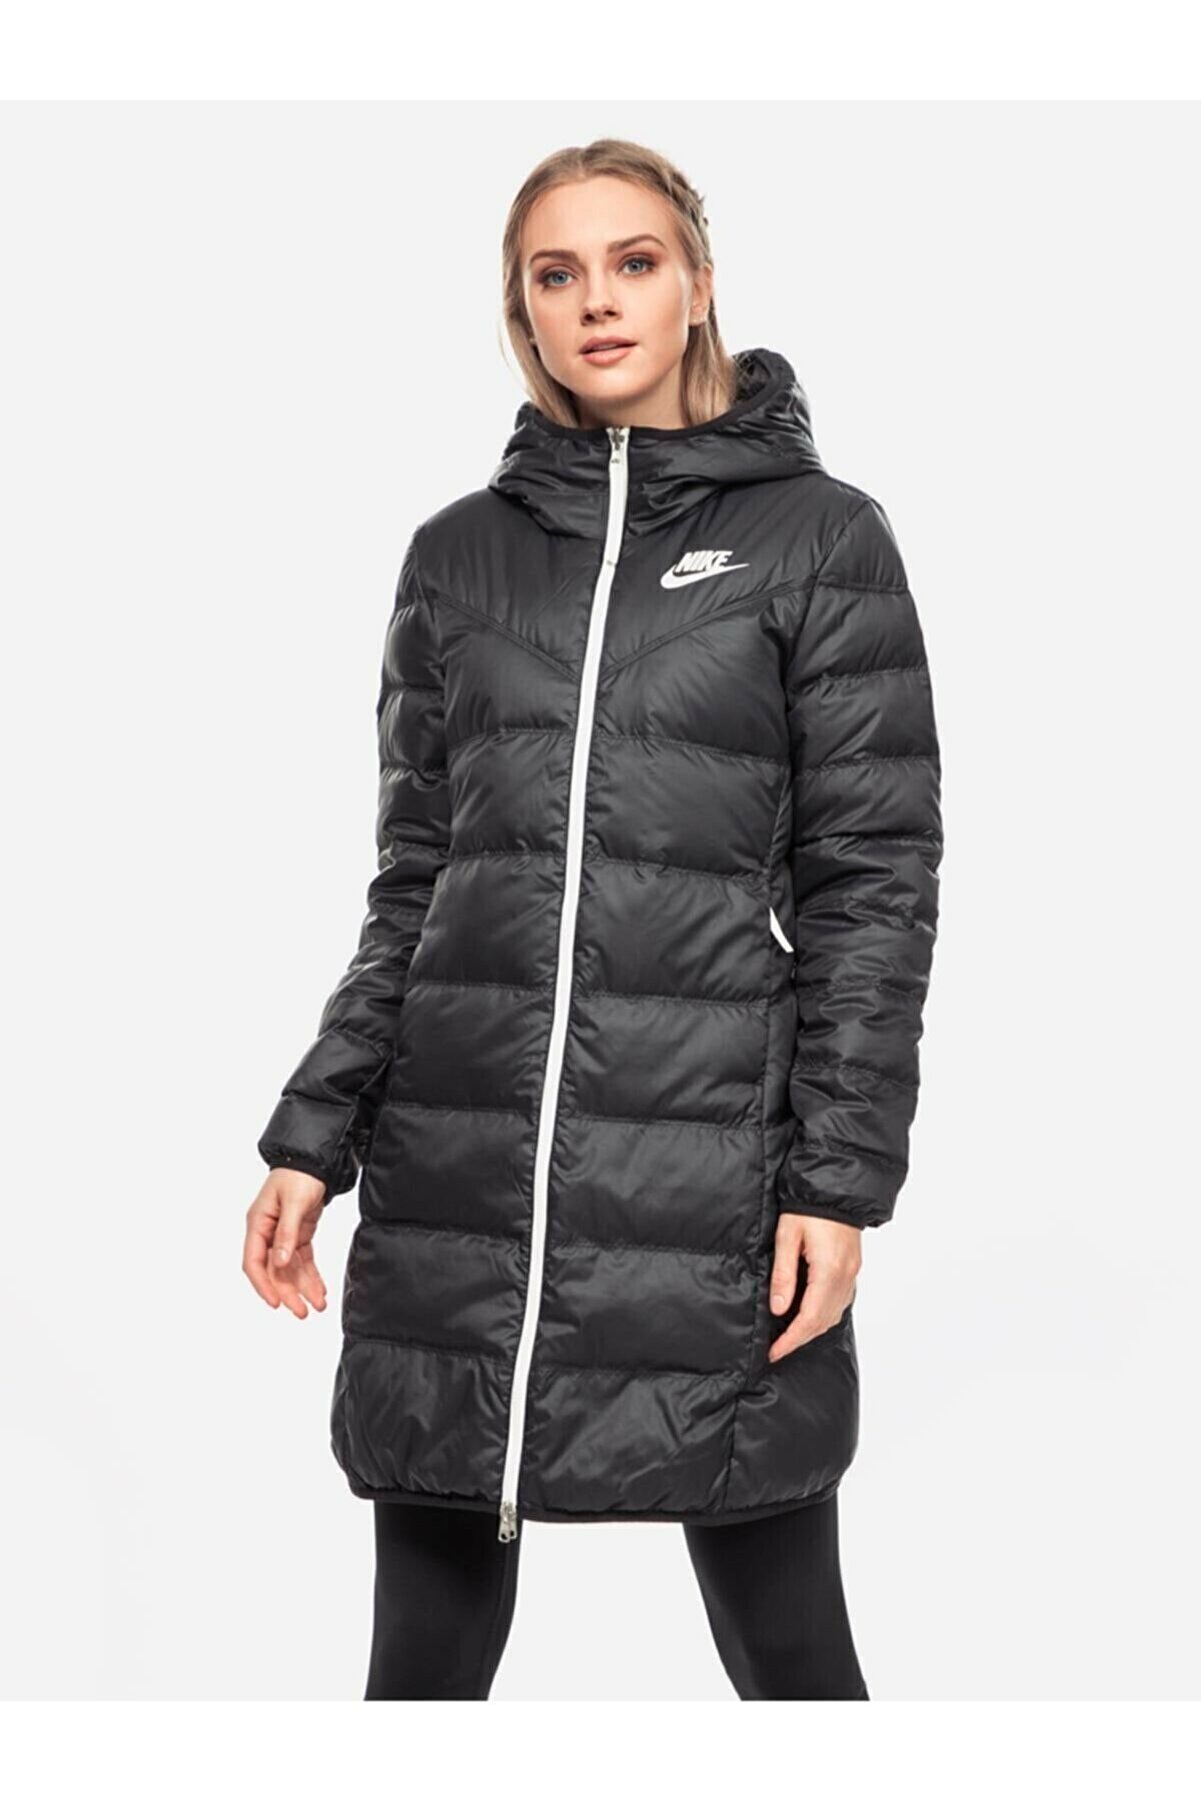 Nike Sportswear Windrunner Çift Taraflı Kadın Siyah Mont Cu0284-010ss